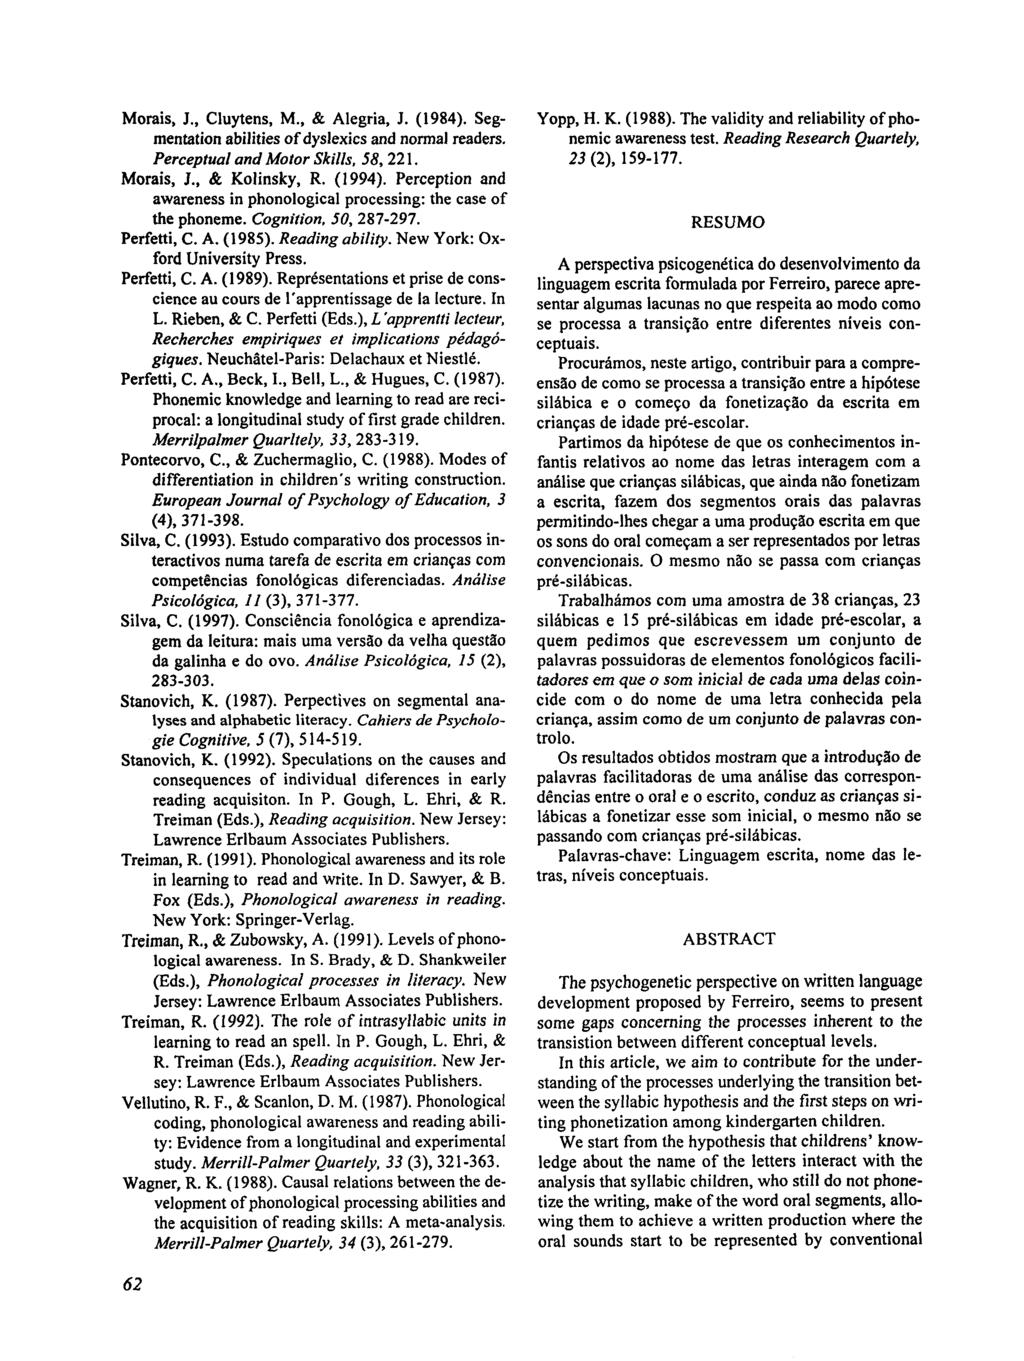 Morais, J., Cluytens, M., & Alegria, J. (1984). Segmentation abilities of dyslexics and normal readers. Percepfual and Motor Skills, 58,221. Morais, J., & Kolinsky, R. (1994).